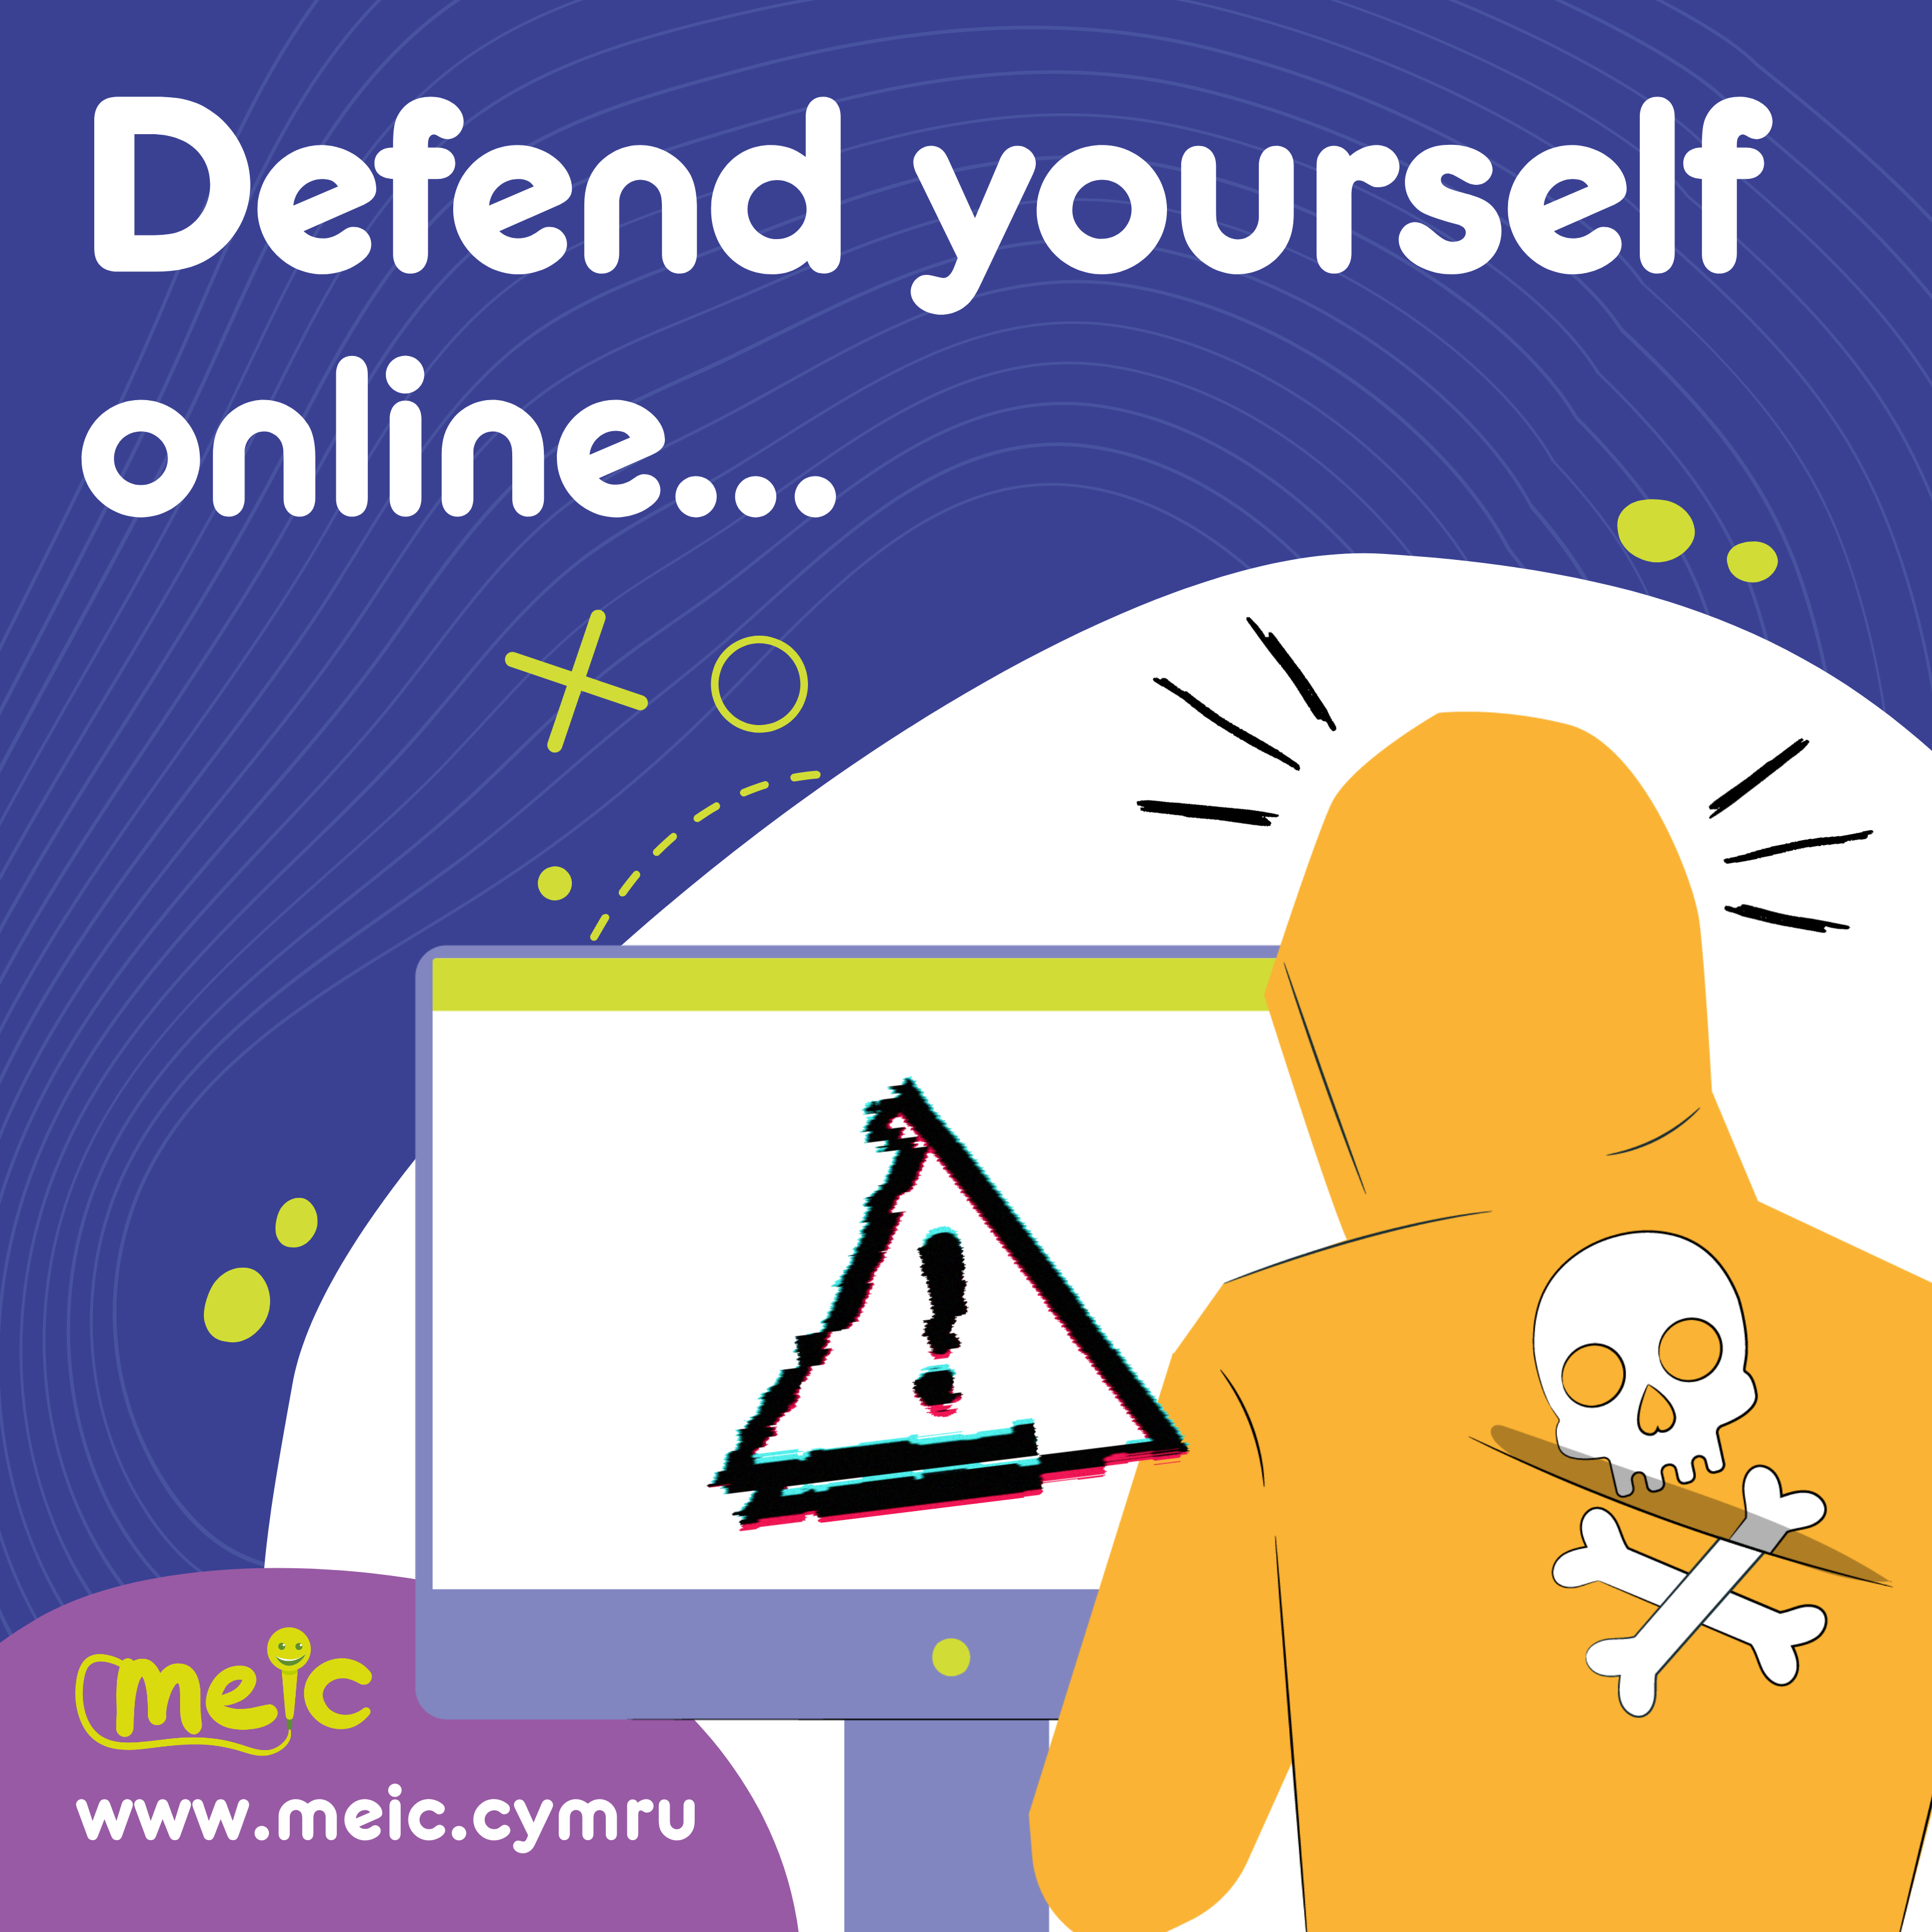 Self Defence Online: Top Tips